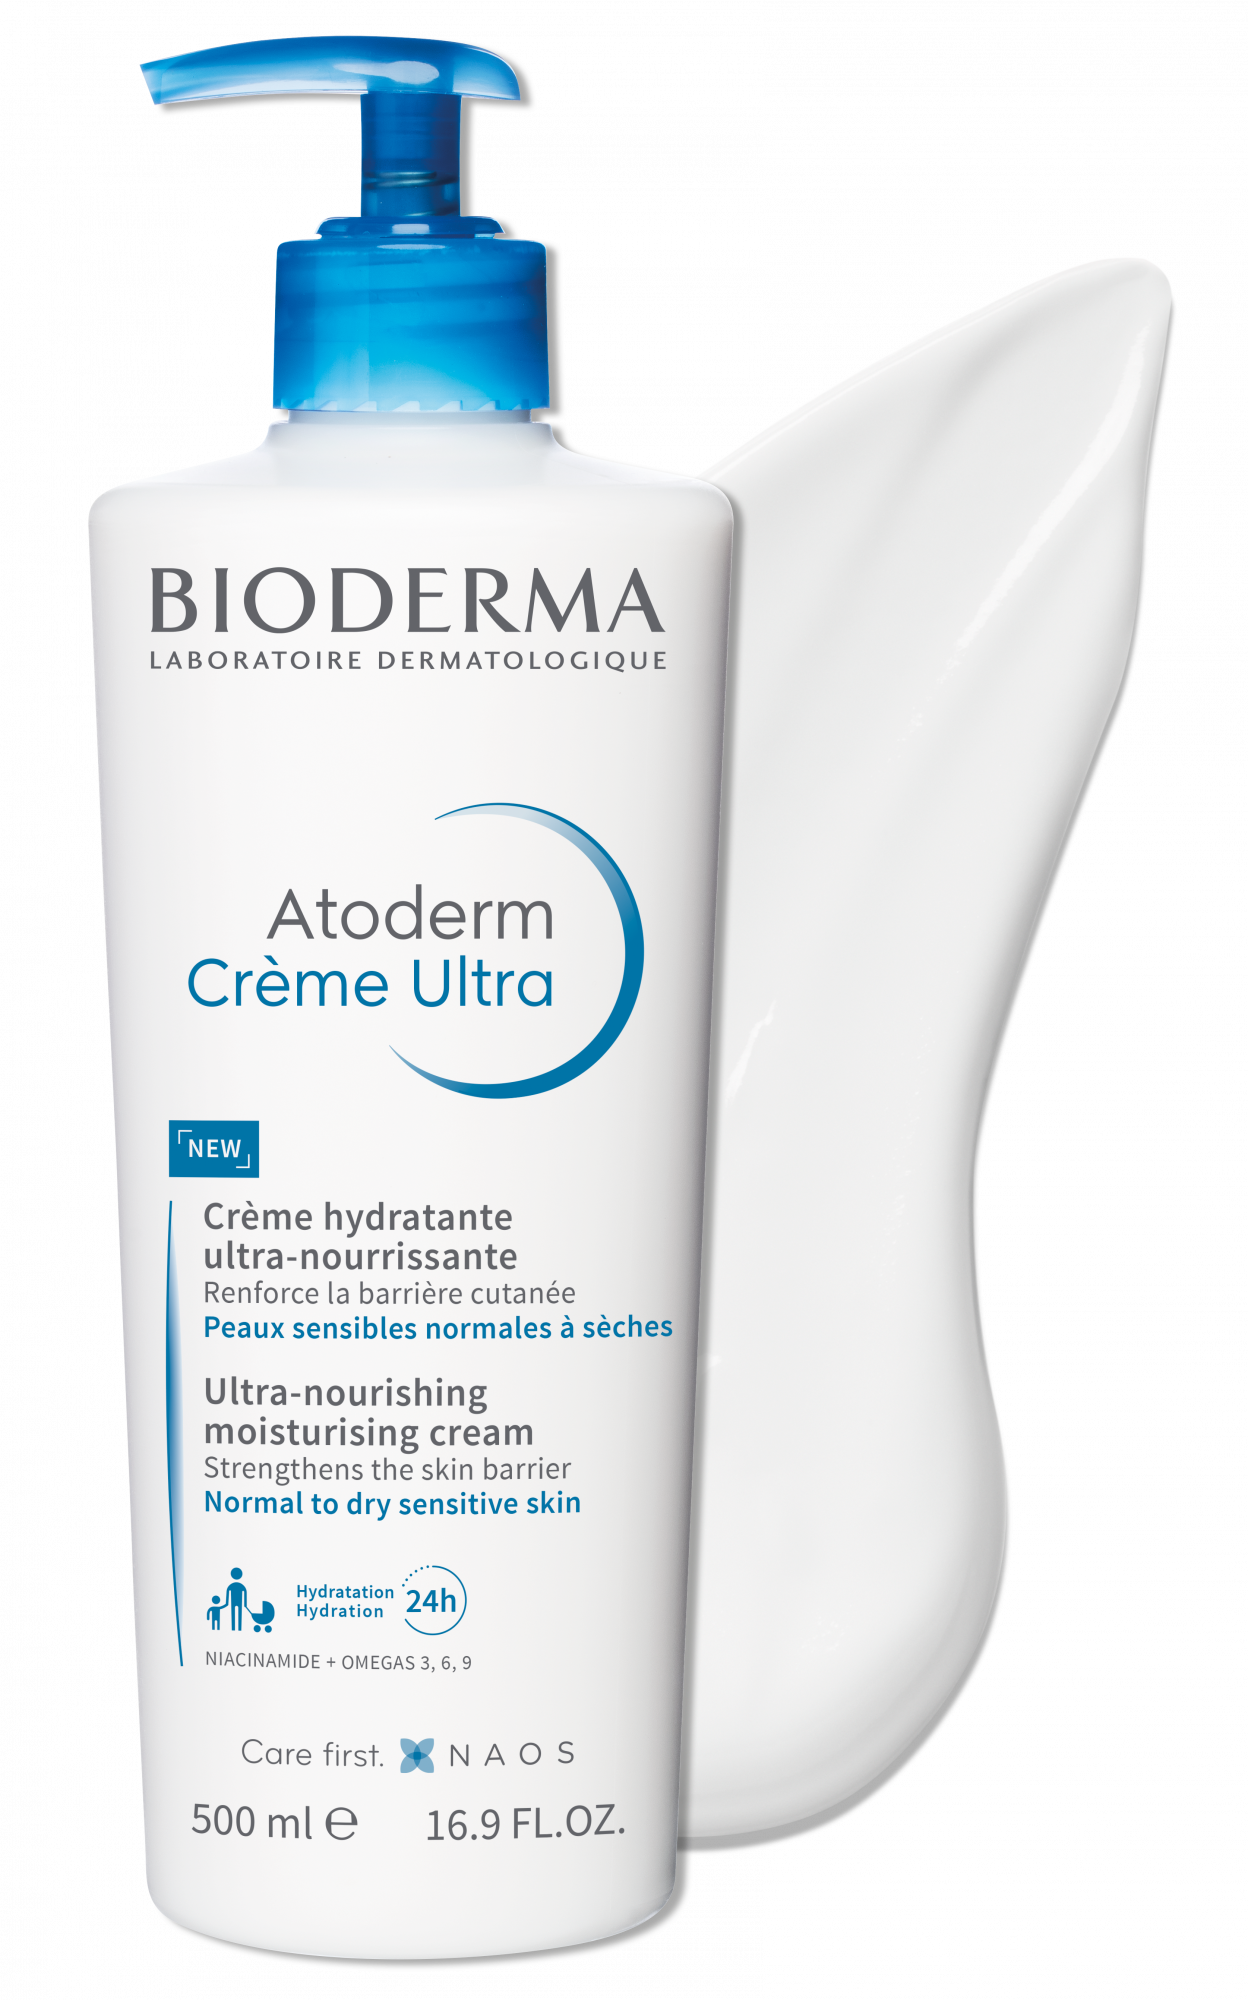 Crème hydratante ultra-nourrissante Atoderm Crème Ultra Bioderma - 400ml